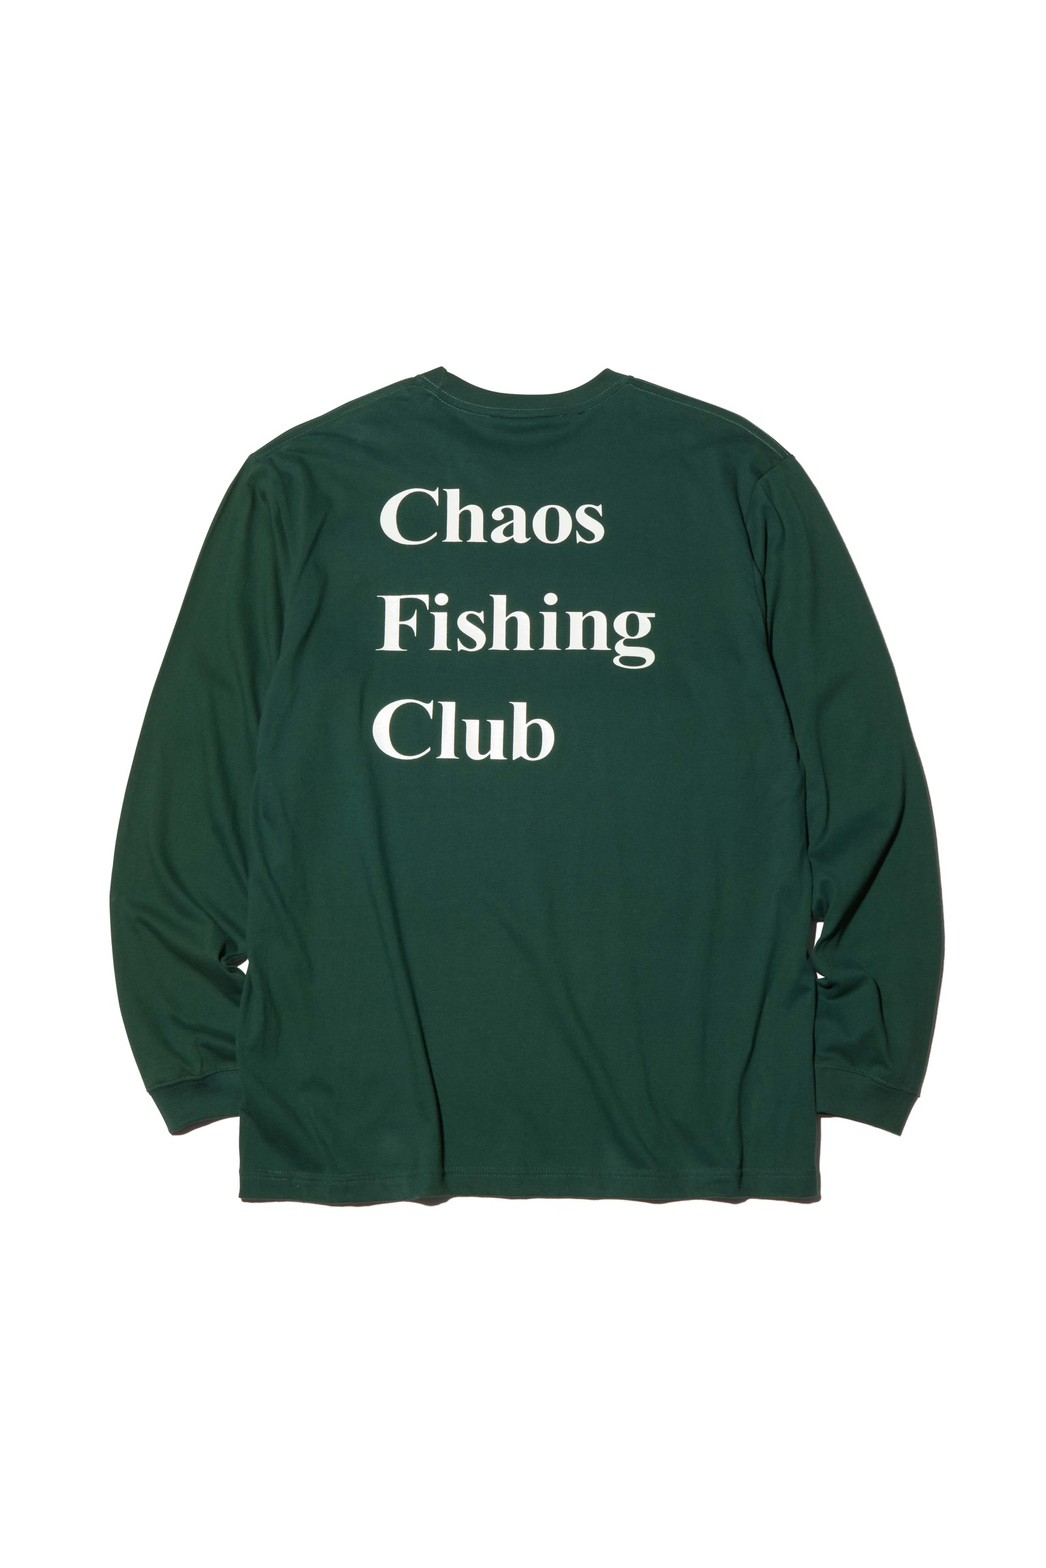 Chaos Fishing Club カオスフィッシングクラブグリーンのパーカー美品